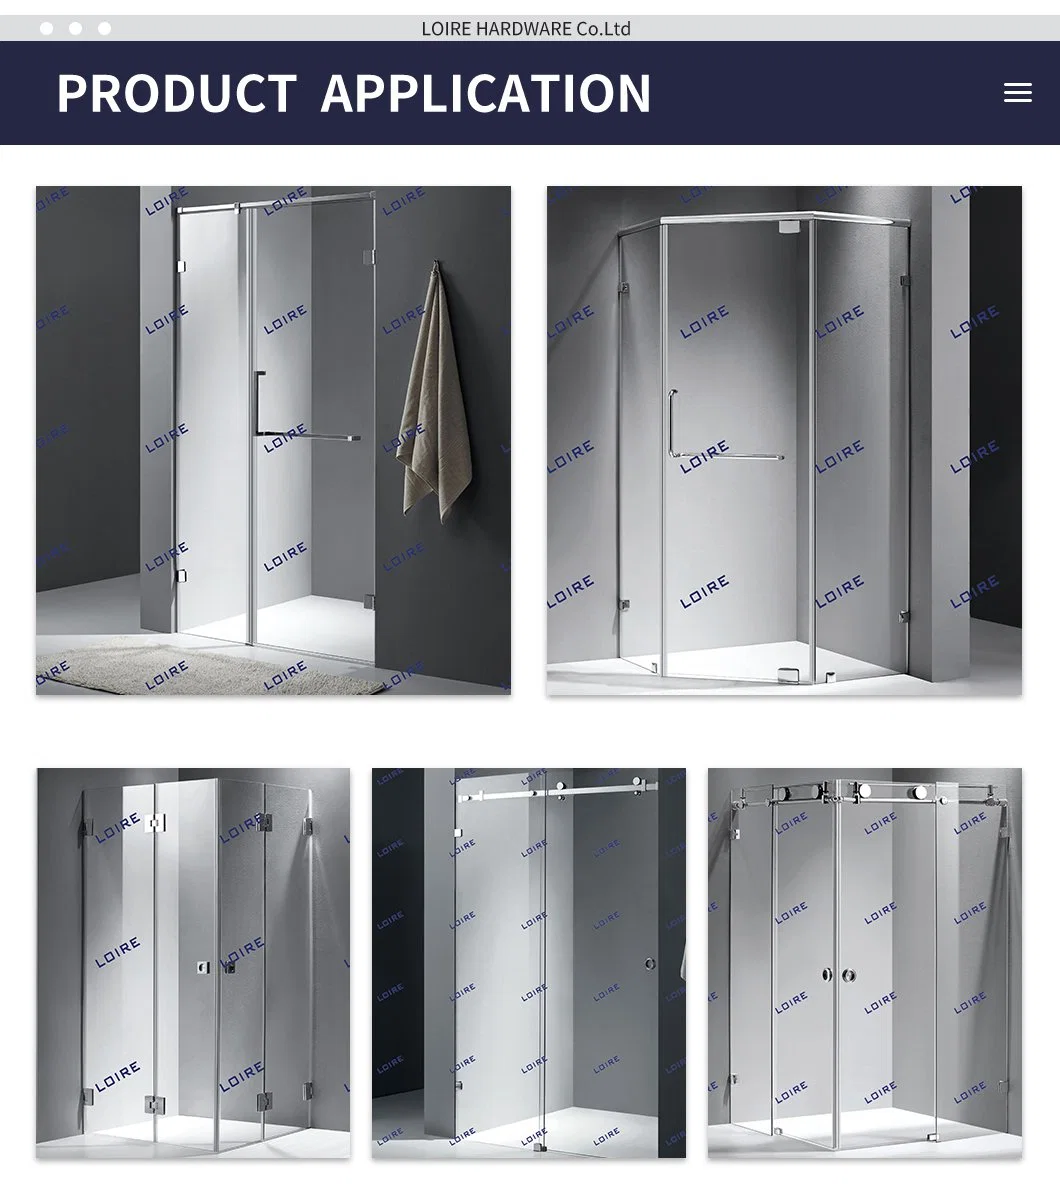 Aluminium Stainless Steel Brass Sliding Door Shower Hardware Glass Door Rail System Two-Way Damping Buffer System for Shower Room